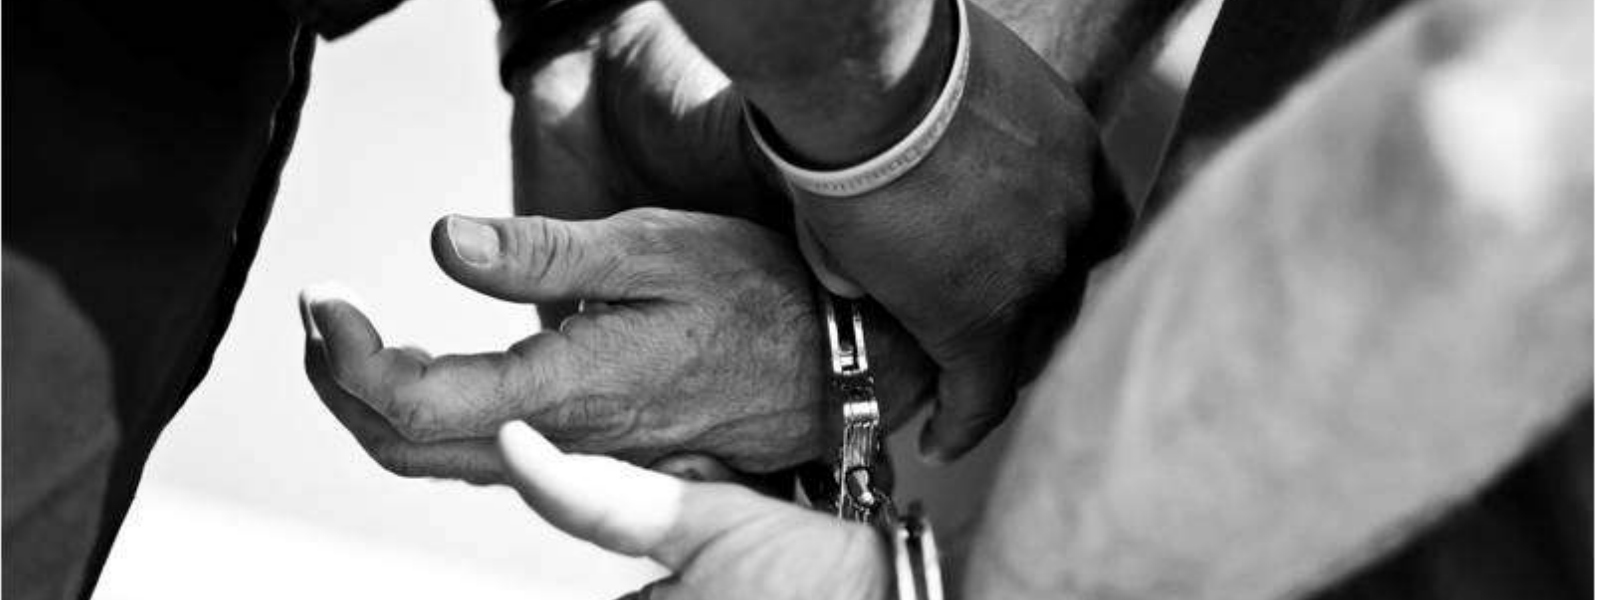 Четирима индийци арестувани заради предполагаема Понци схема